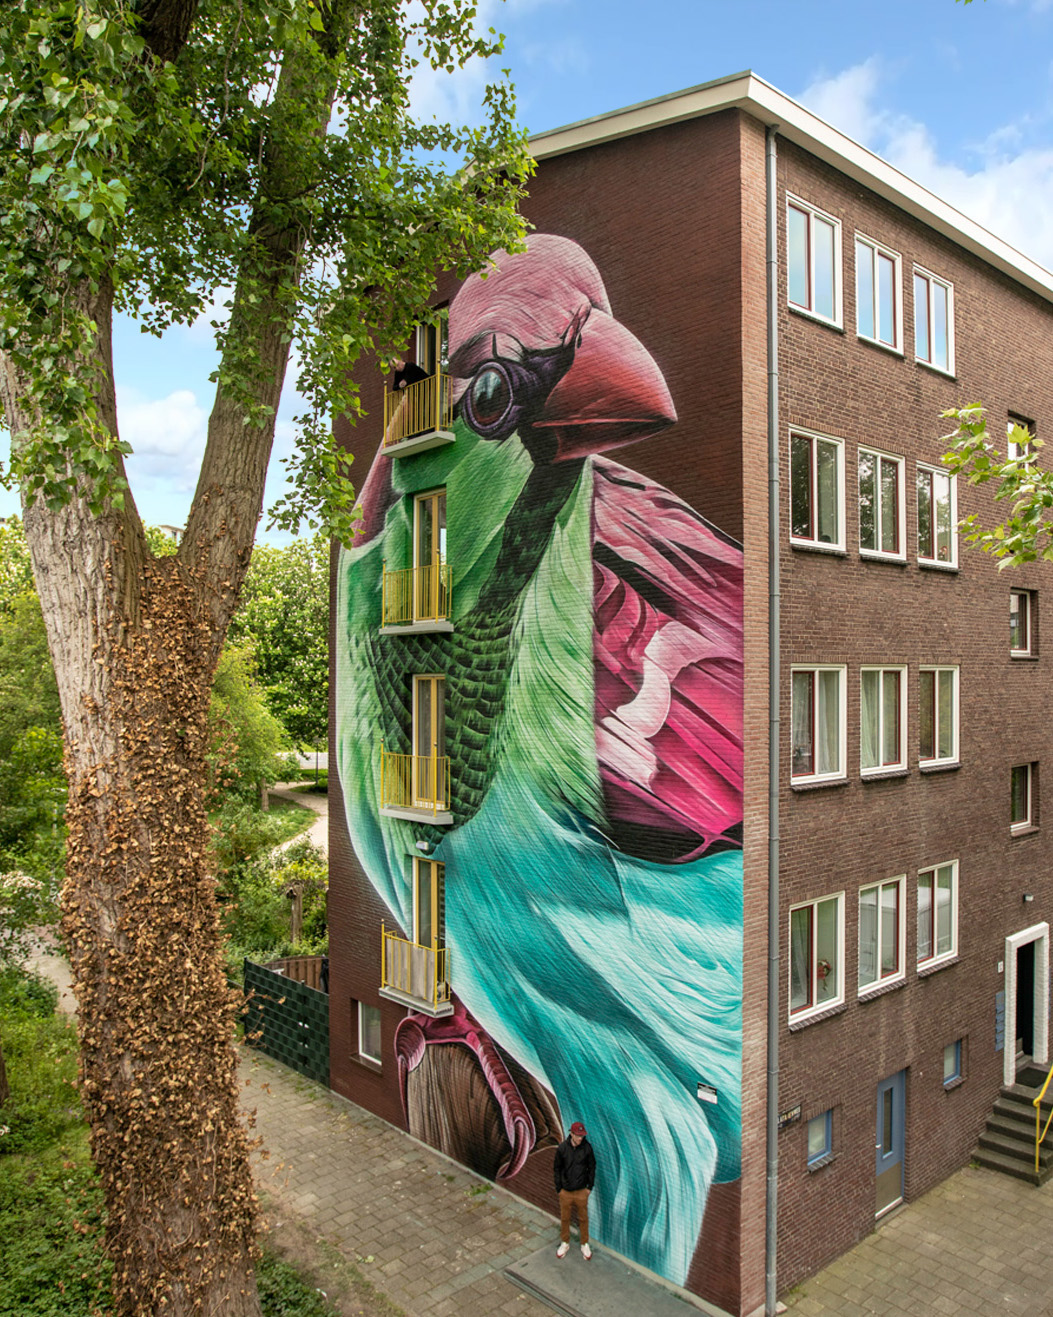 Dopie for "If Walls Could Speak" festival by Amsterdam Street Art Photo Tim van Vliet